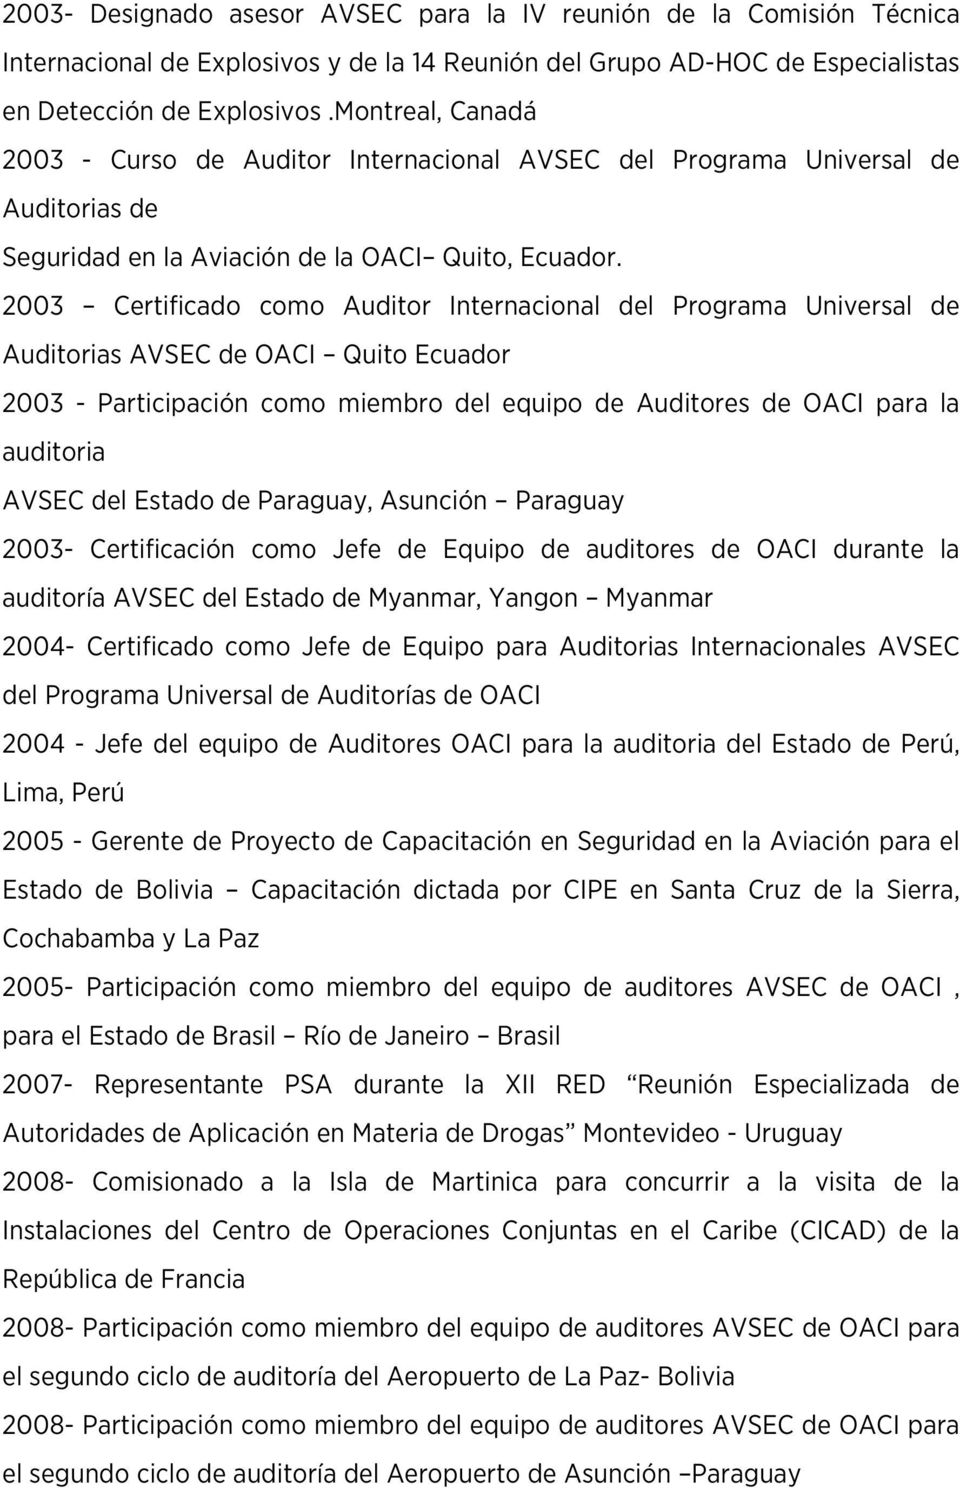 2003 Certificado como Auditor Internacional del Programa Universal de Auditorias AVSEC de OACI Quito Ecuador 2003 - Participación como miembro del equipo de Auditores de OACI para la auditoria AVSEC